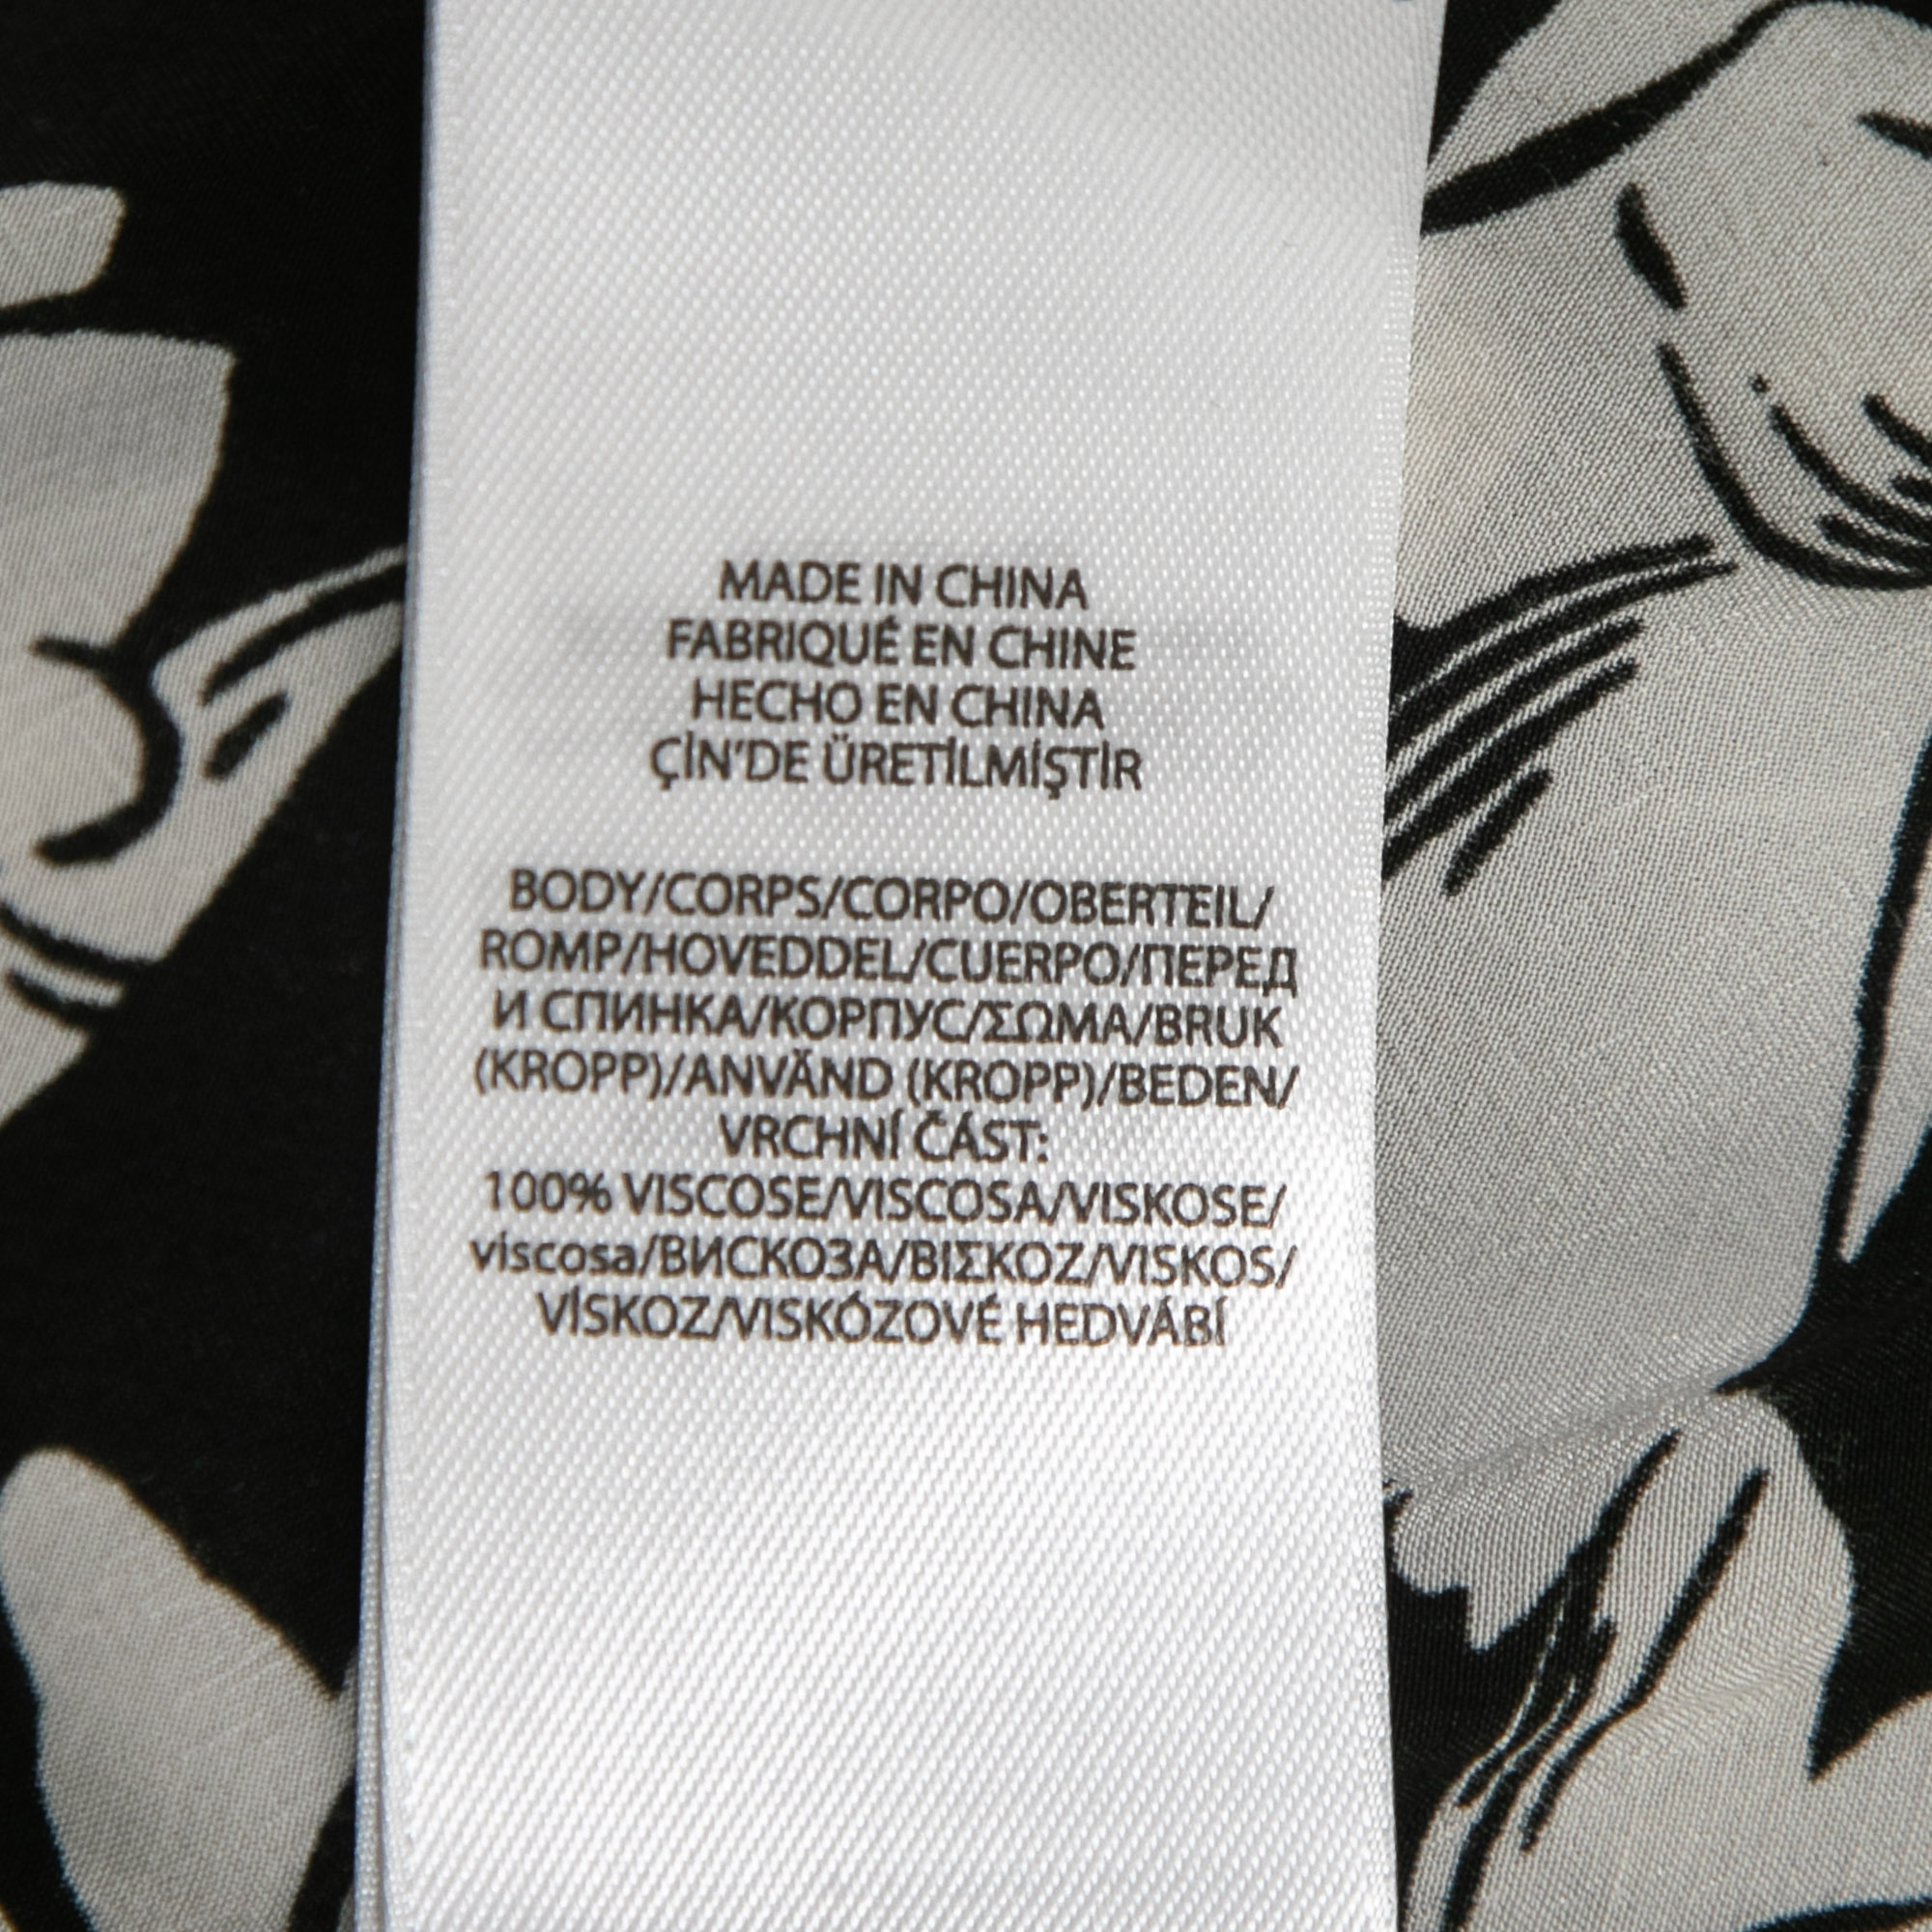 Polo Ralph Lauren Black Floral Printed Crepe Wrap Mini Skirt S